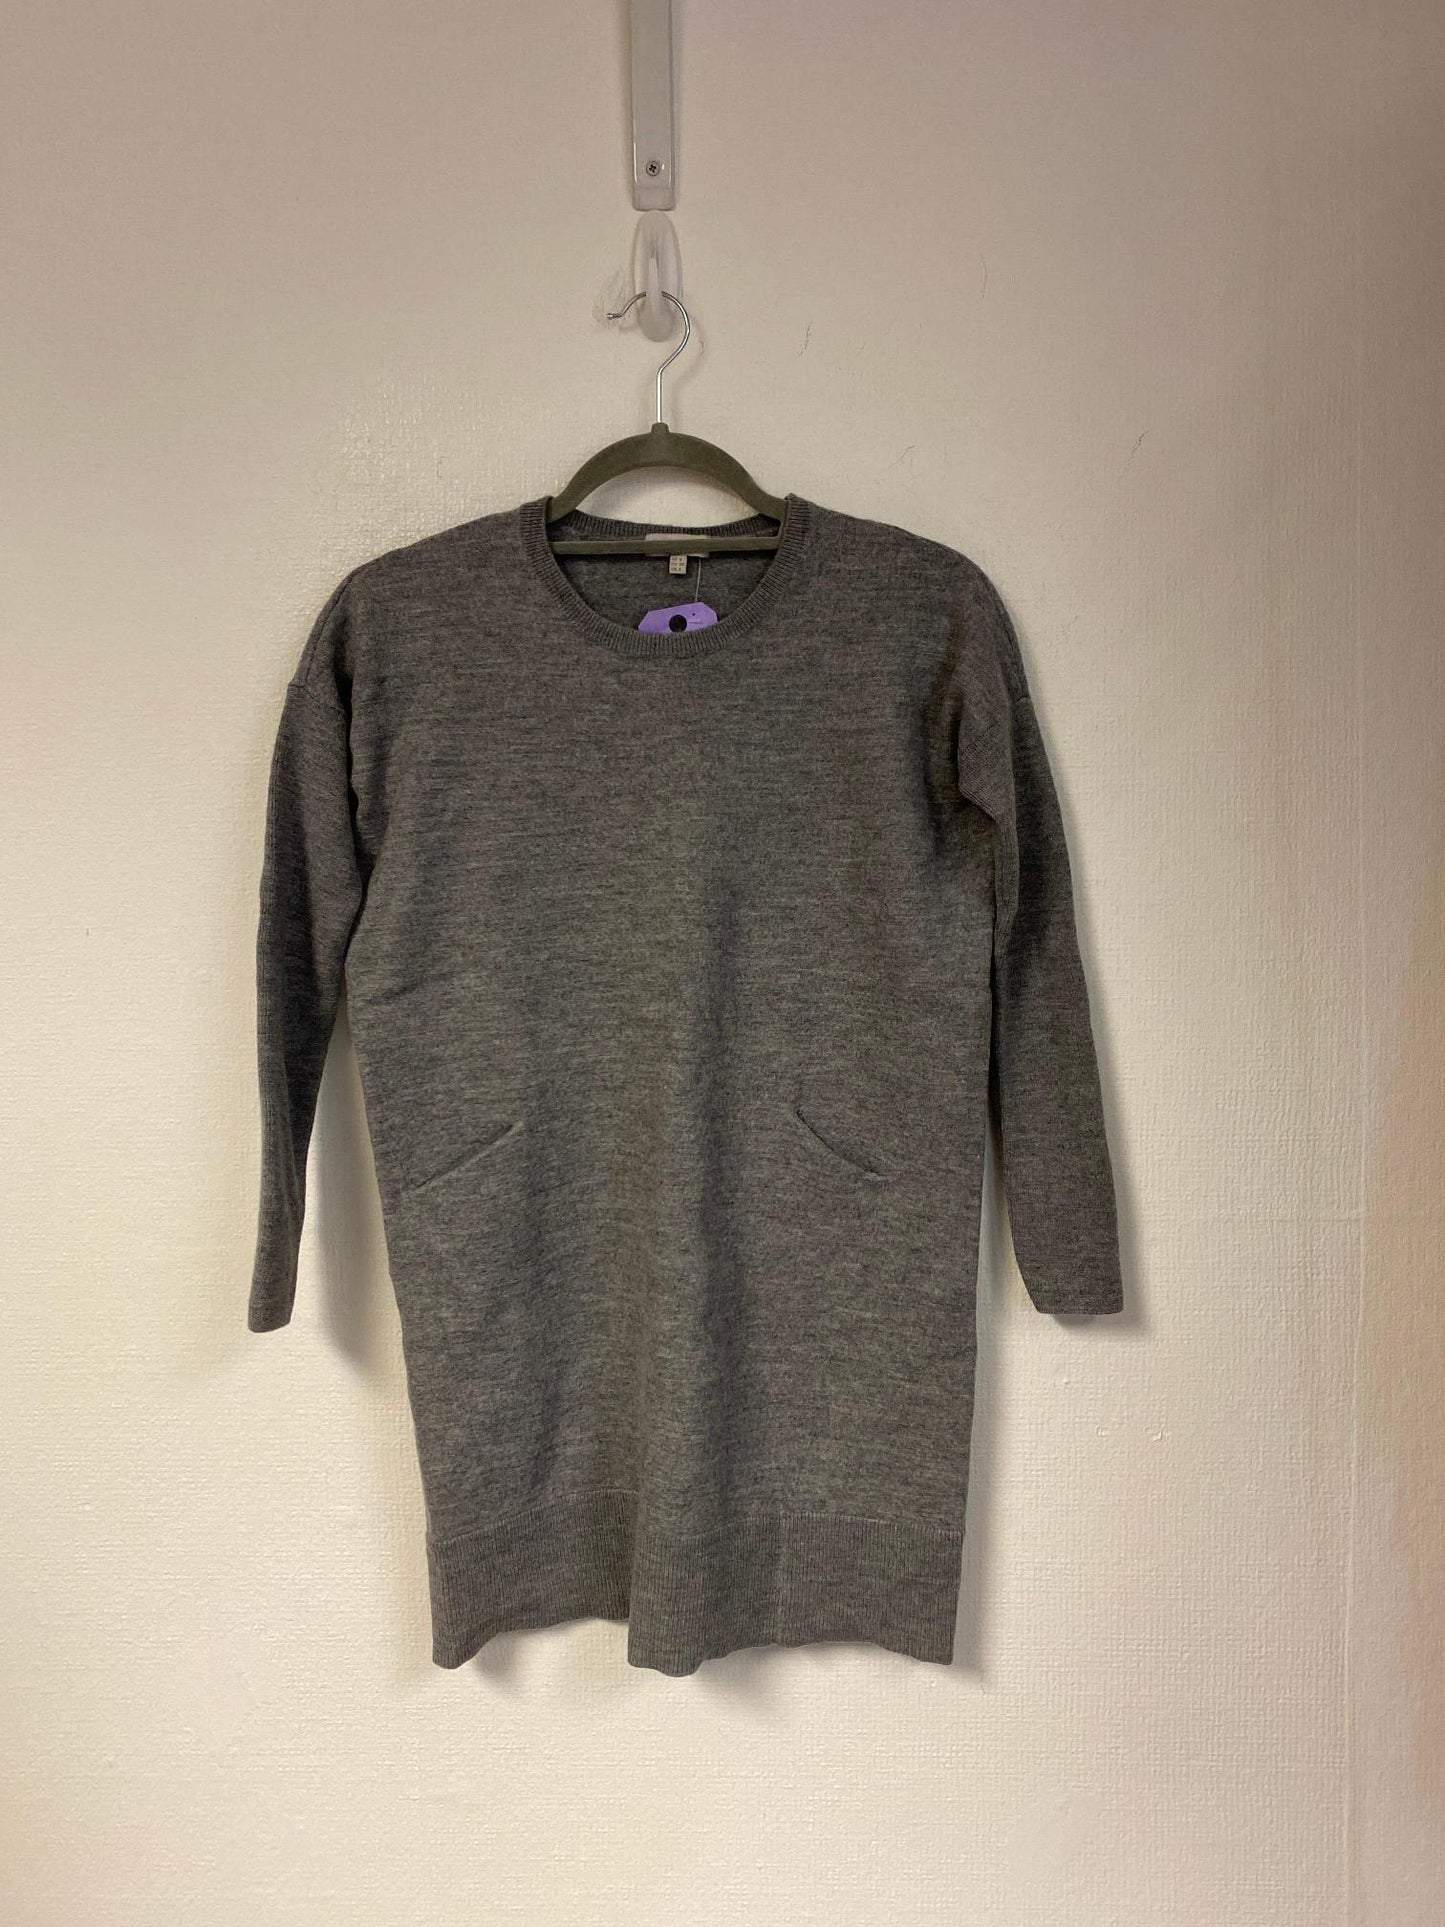 Grey knit jumper with pockets, Hobbs, Size 8 - Damaged Item Sale